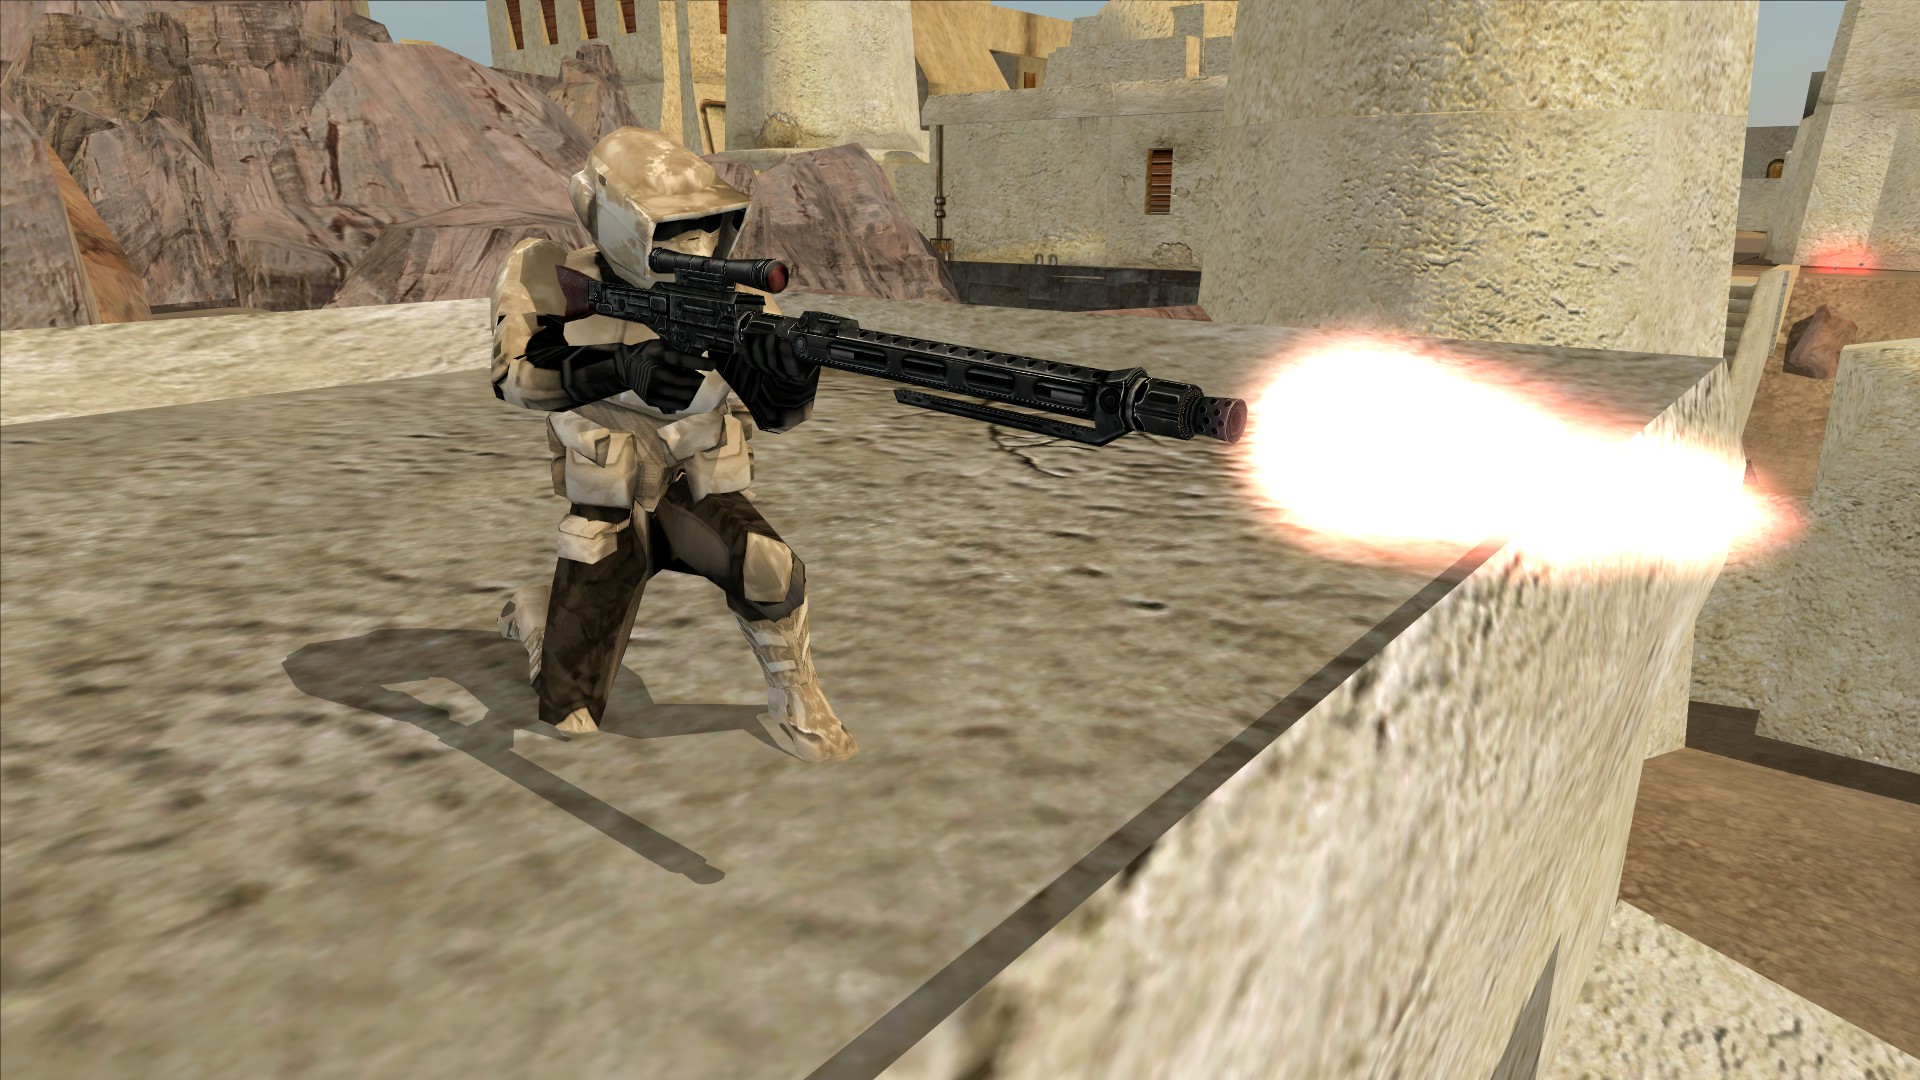 Tatooine: Dust2 [Star Wars Battlefront II (2005)] [Mods]